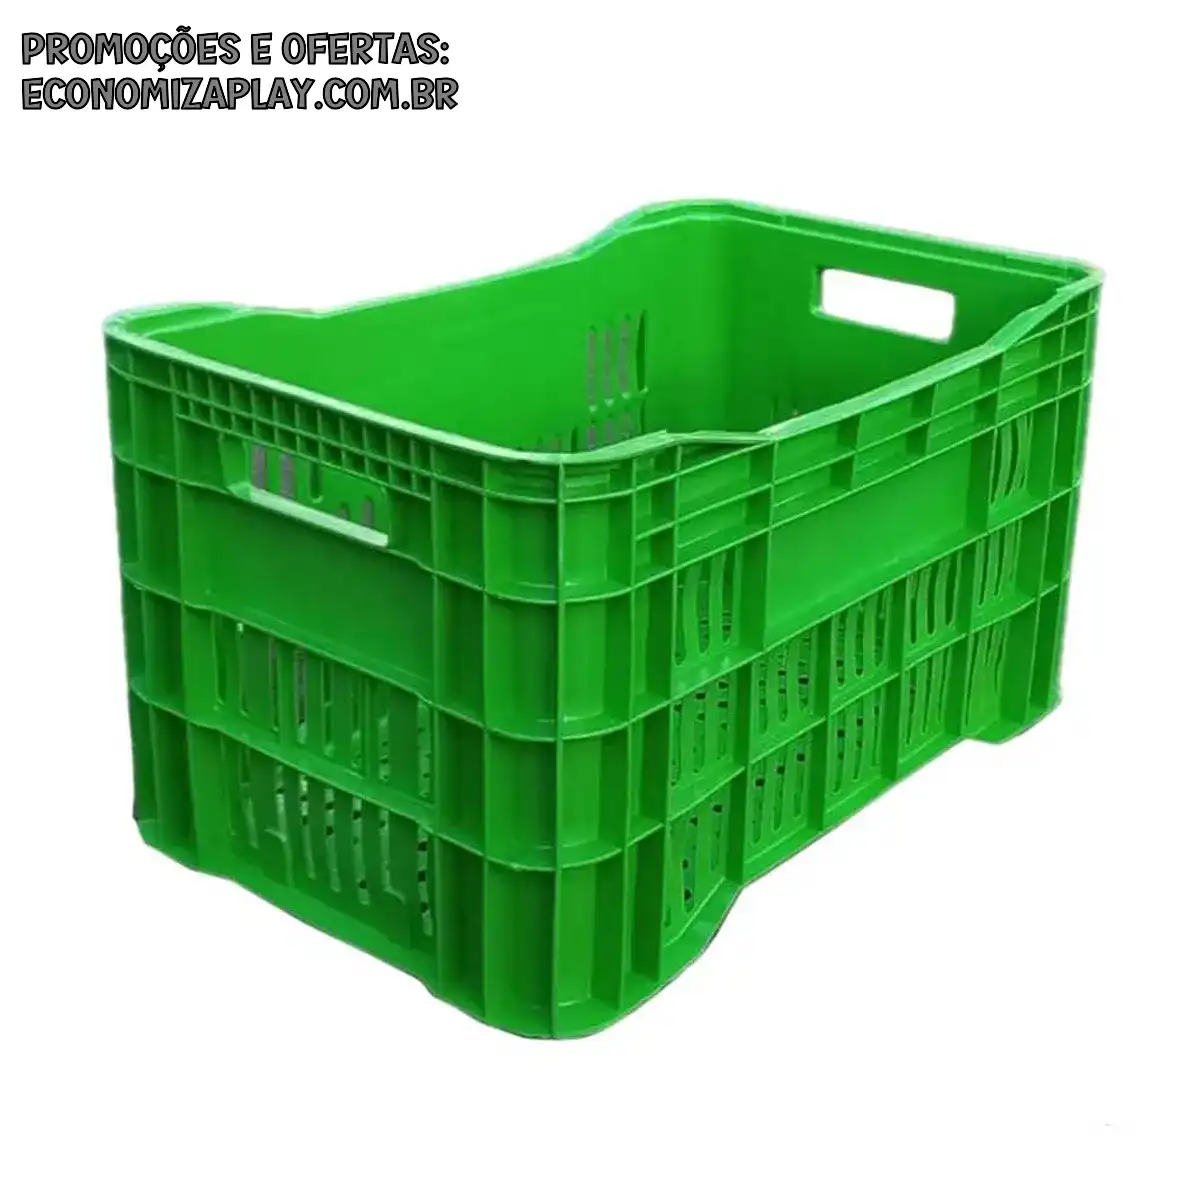 1 X Caixa Organizadora Multiuso Agricola Hortifruti Vazada Feira Plastica 49L